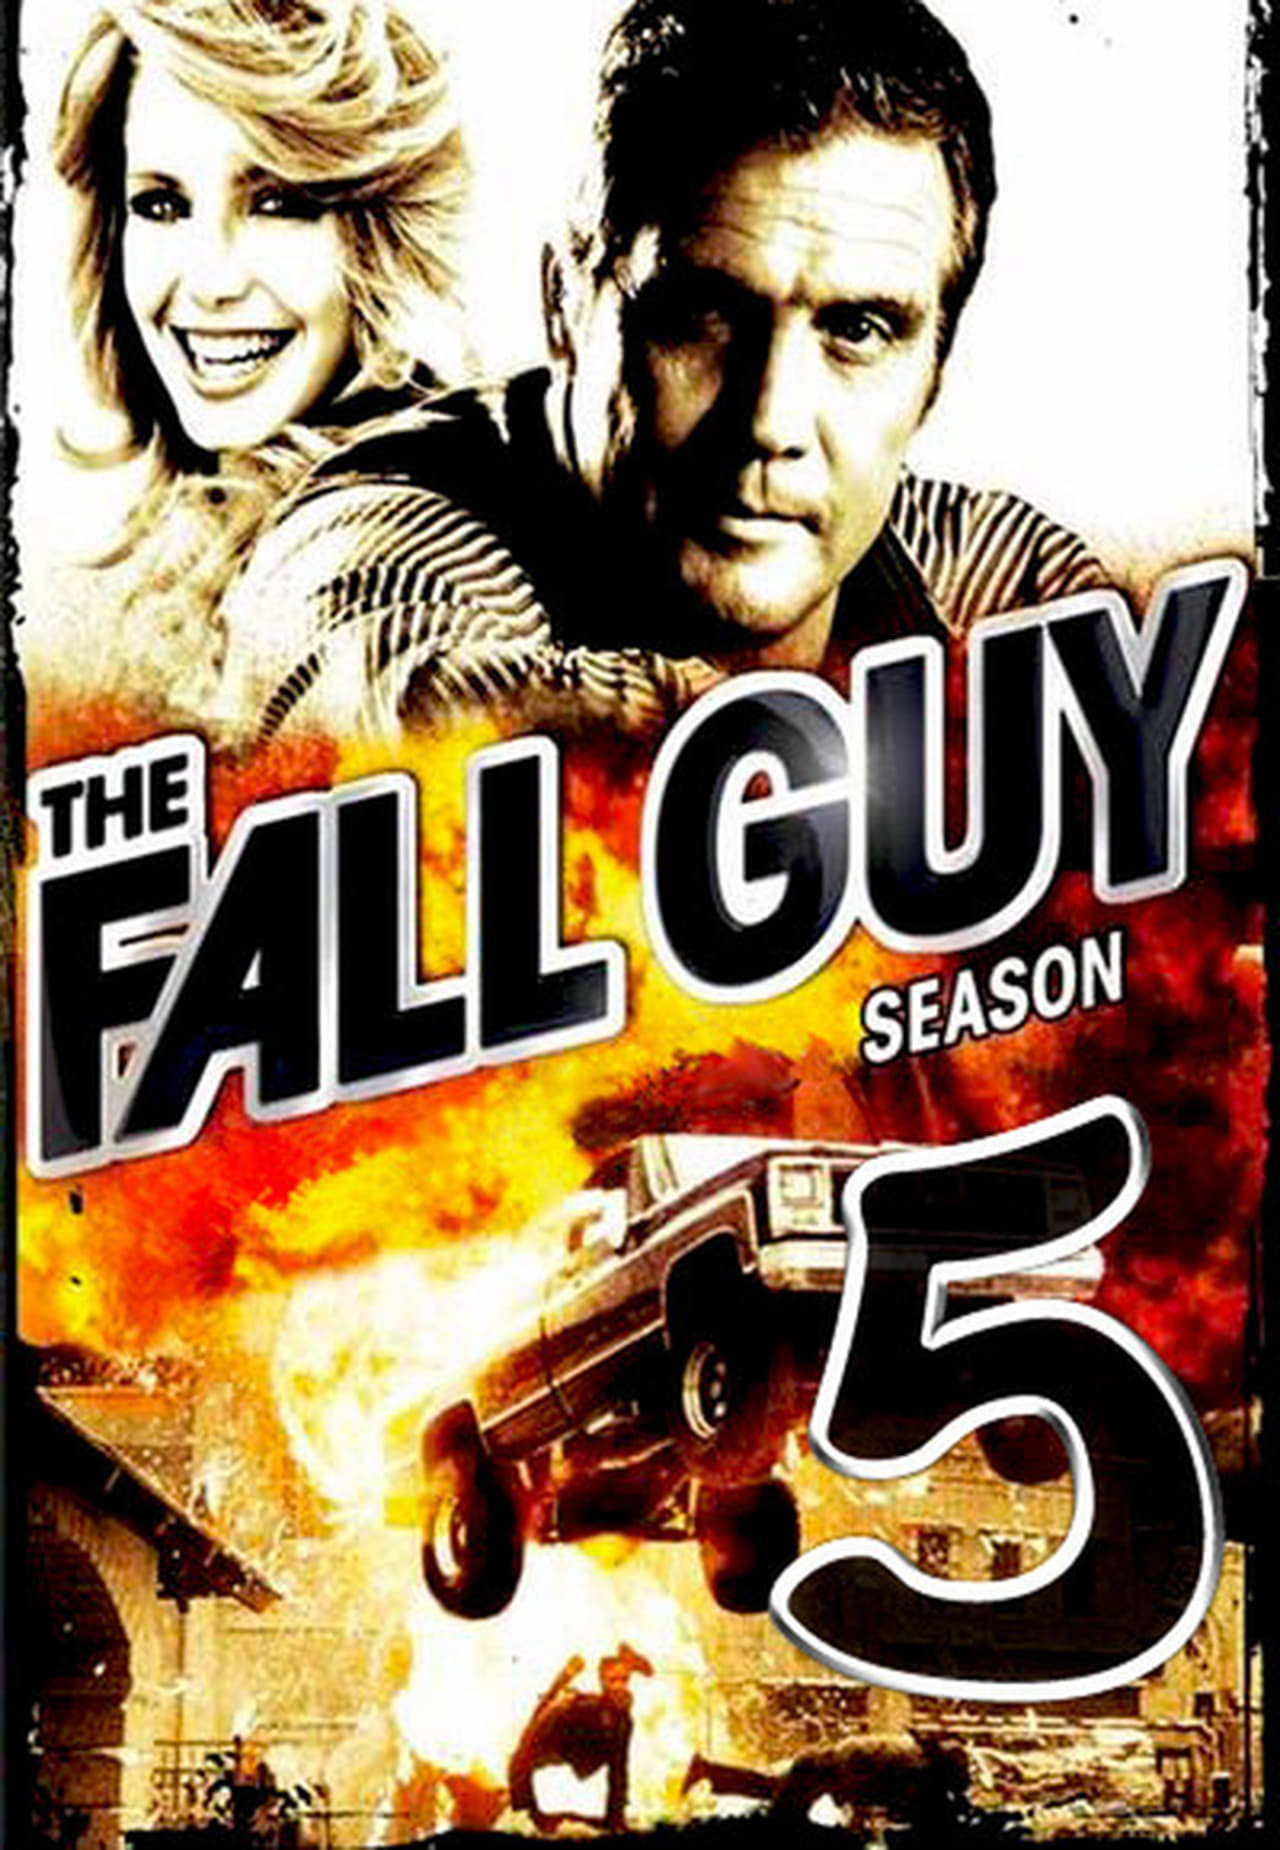 The Fall Guy Season 5